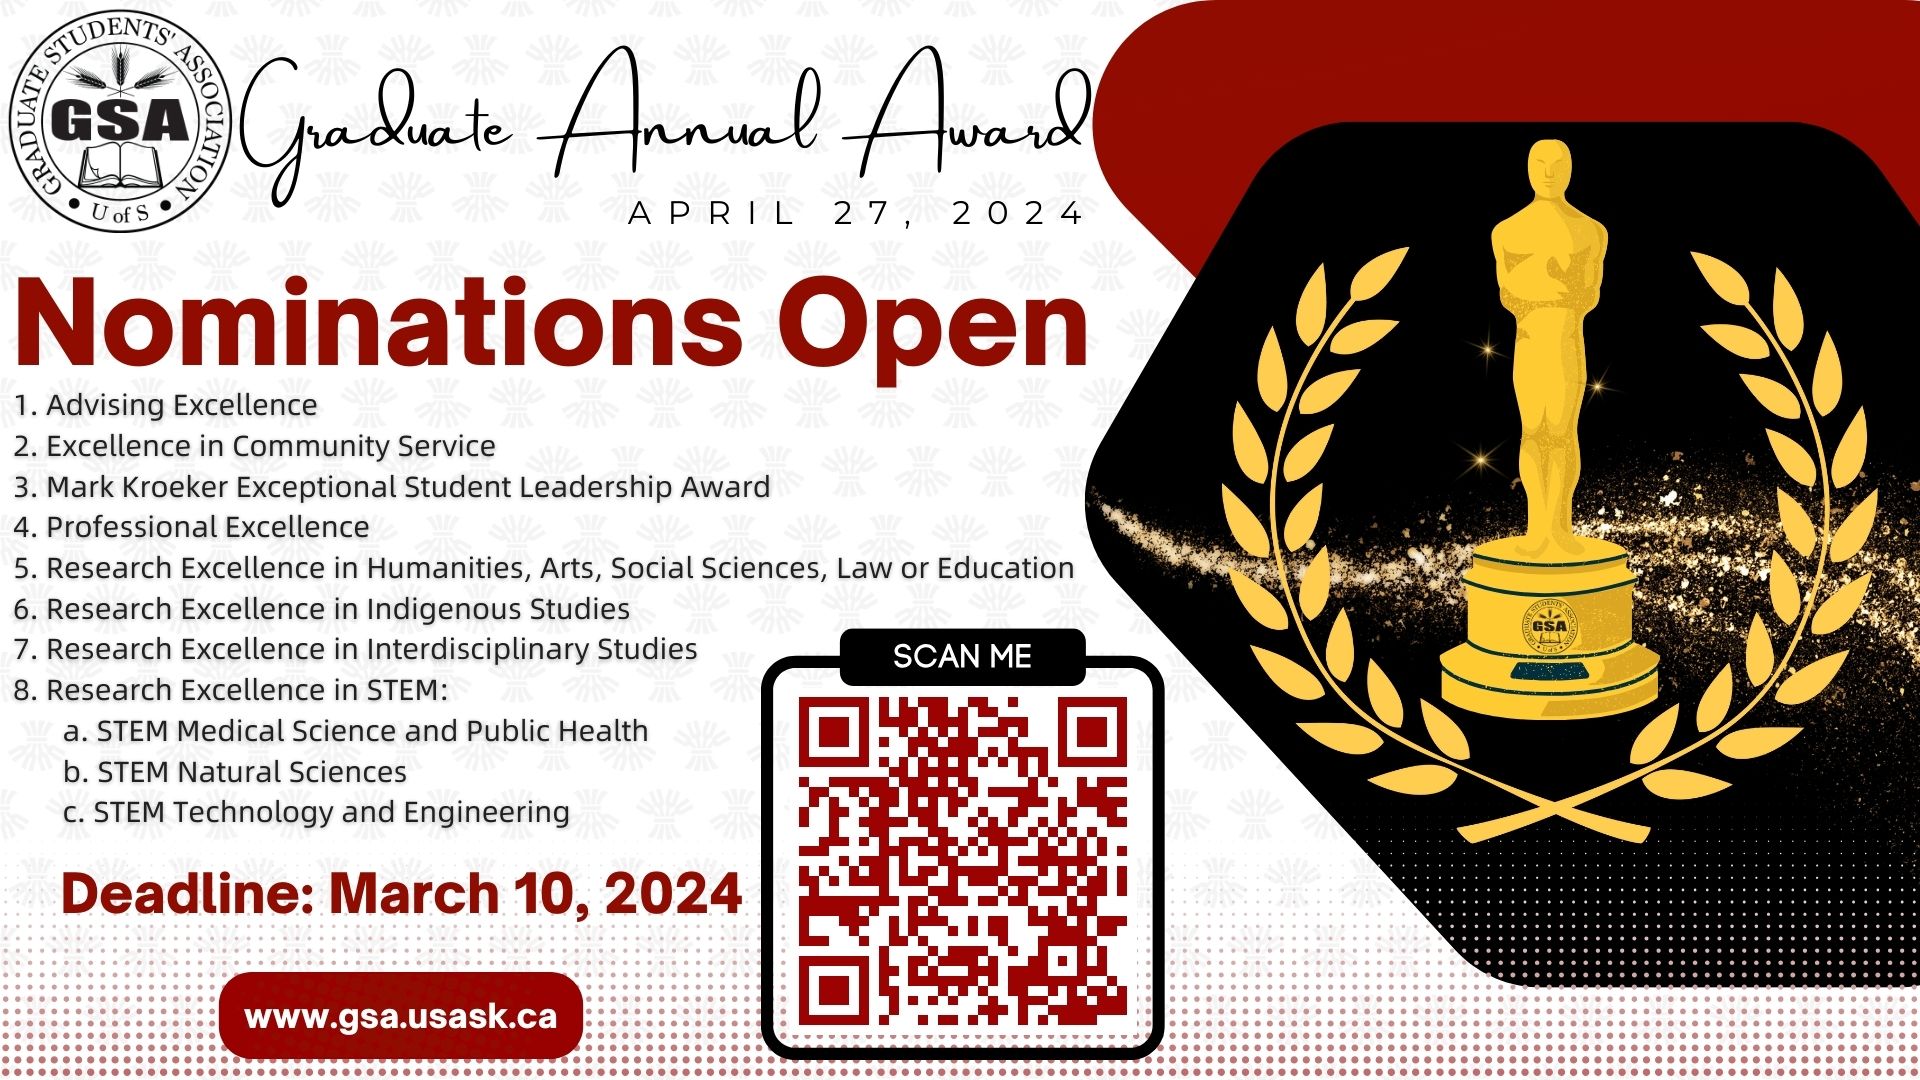 GSA Annual Awards Graduate Students' Association University of